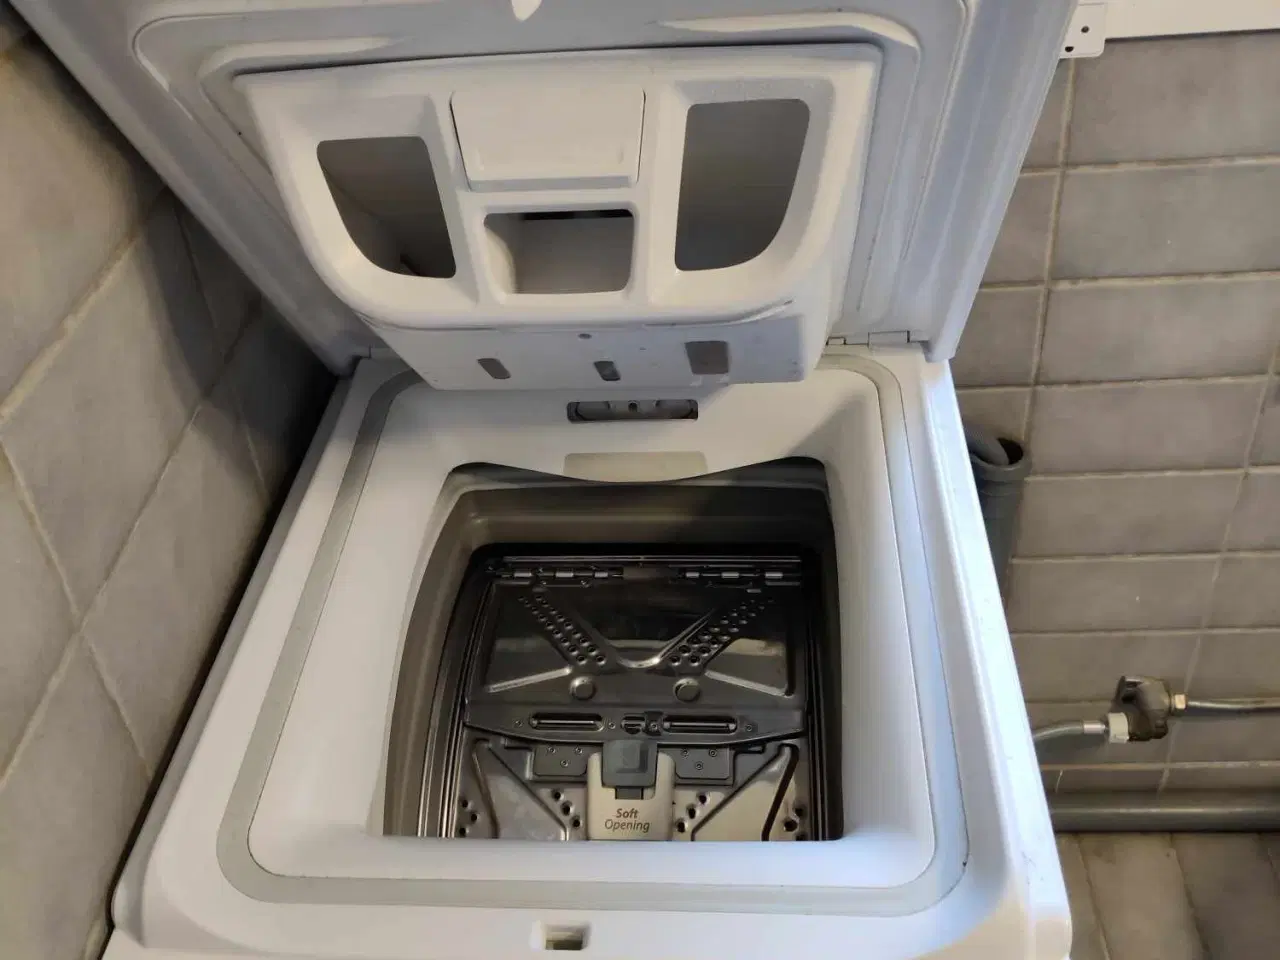 Billede 4 - Whirlpool vaskemaskine, PWTL29126/N, topbetjent